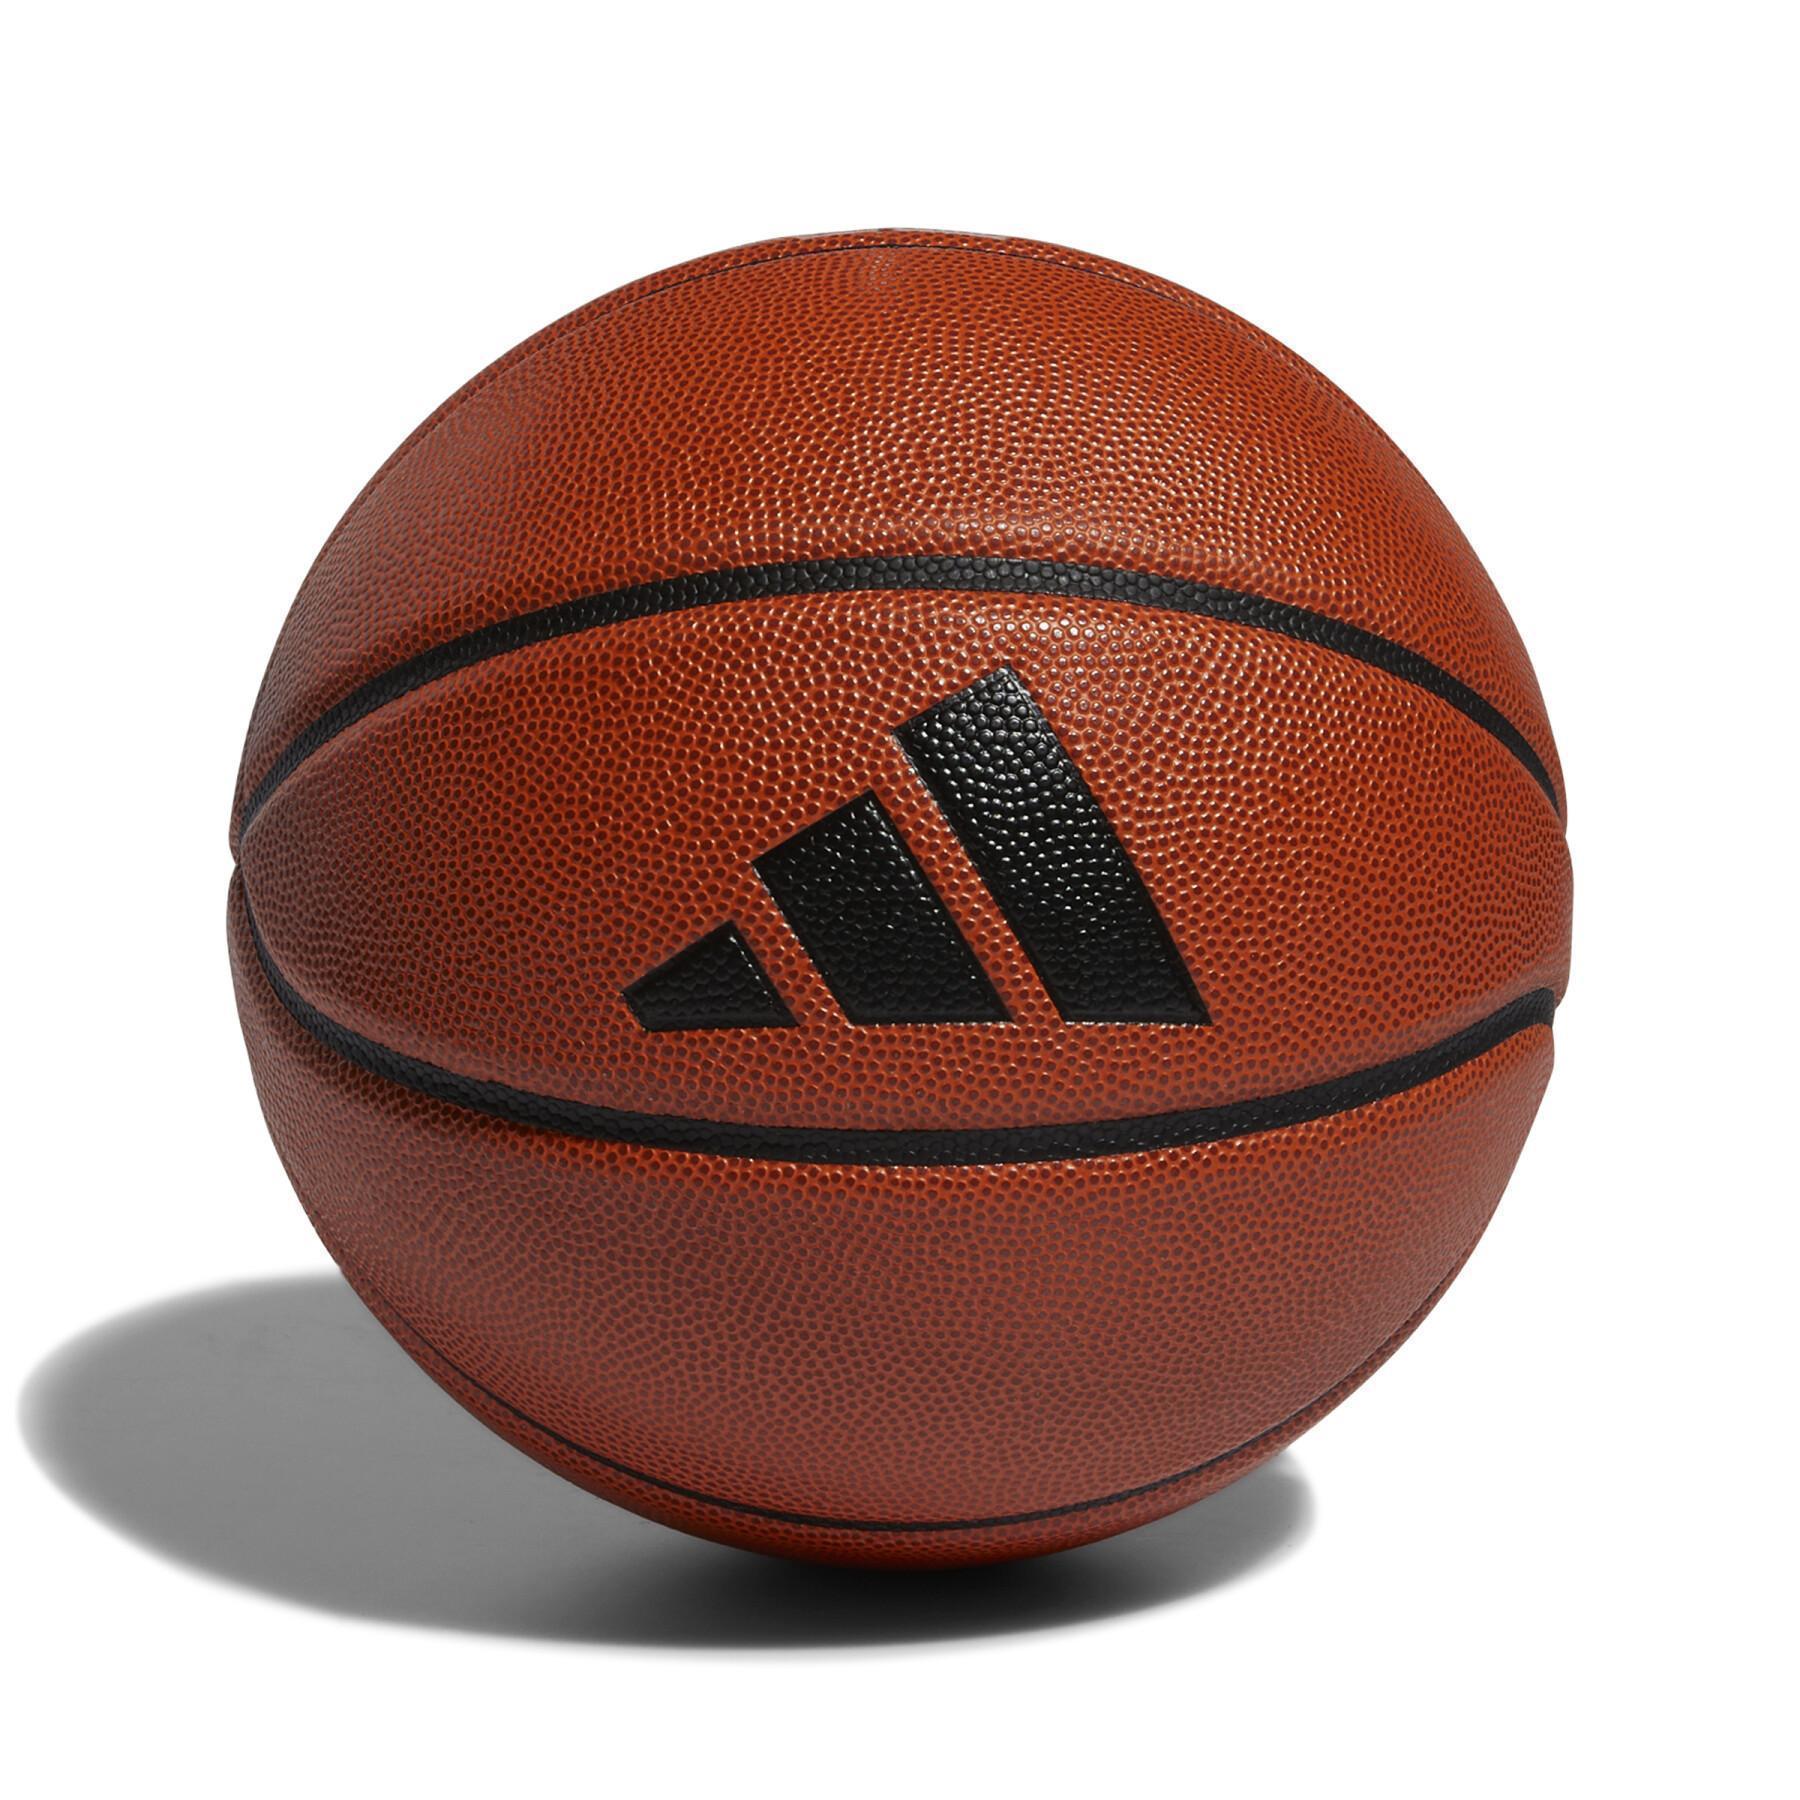 Basketball adidas All Court 3.0